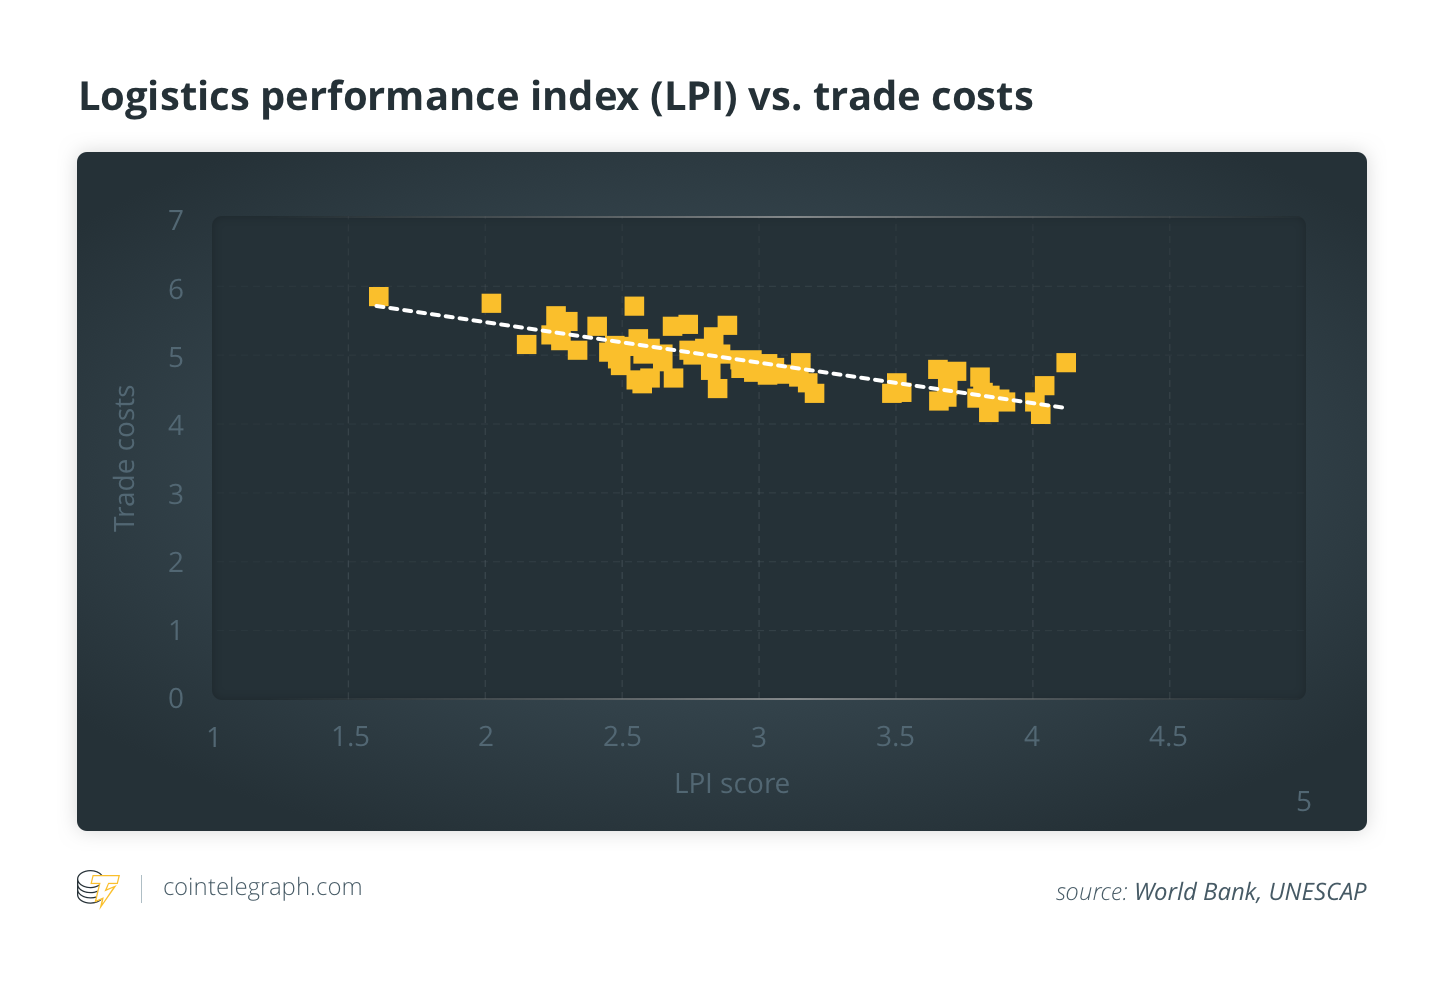 Correlation between LPI score and trade costs